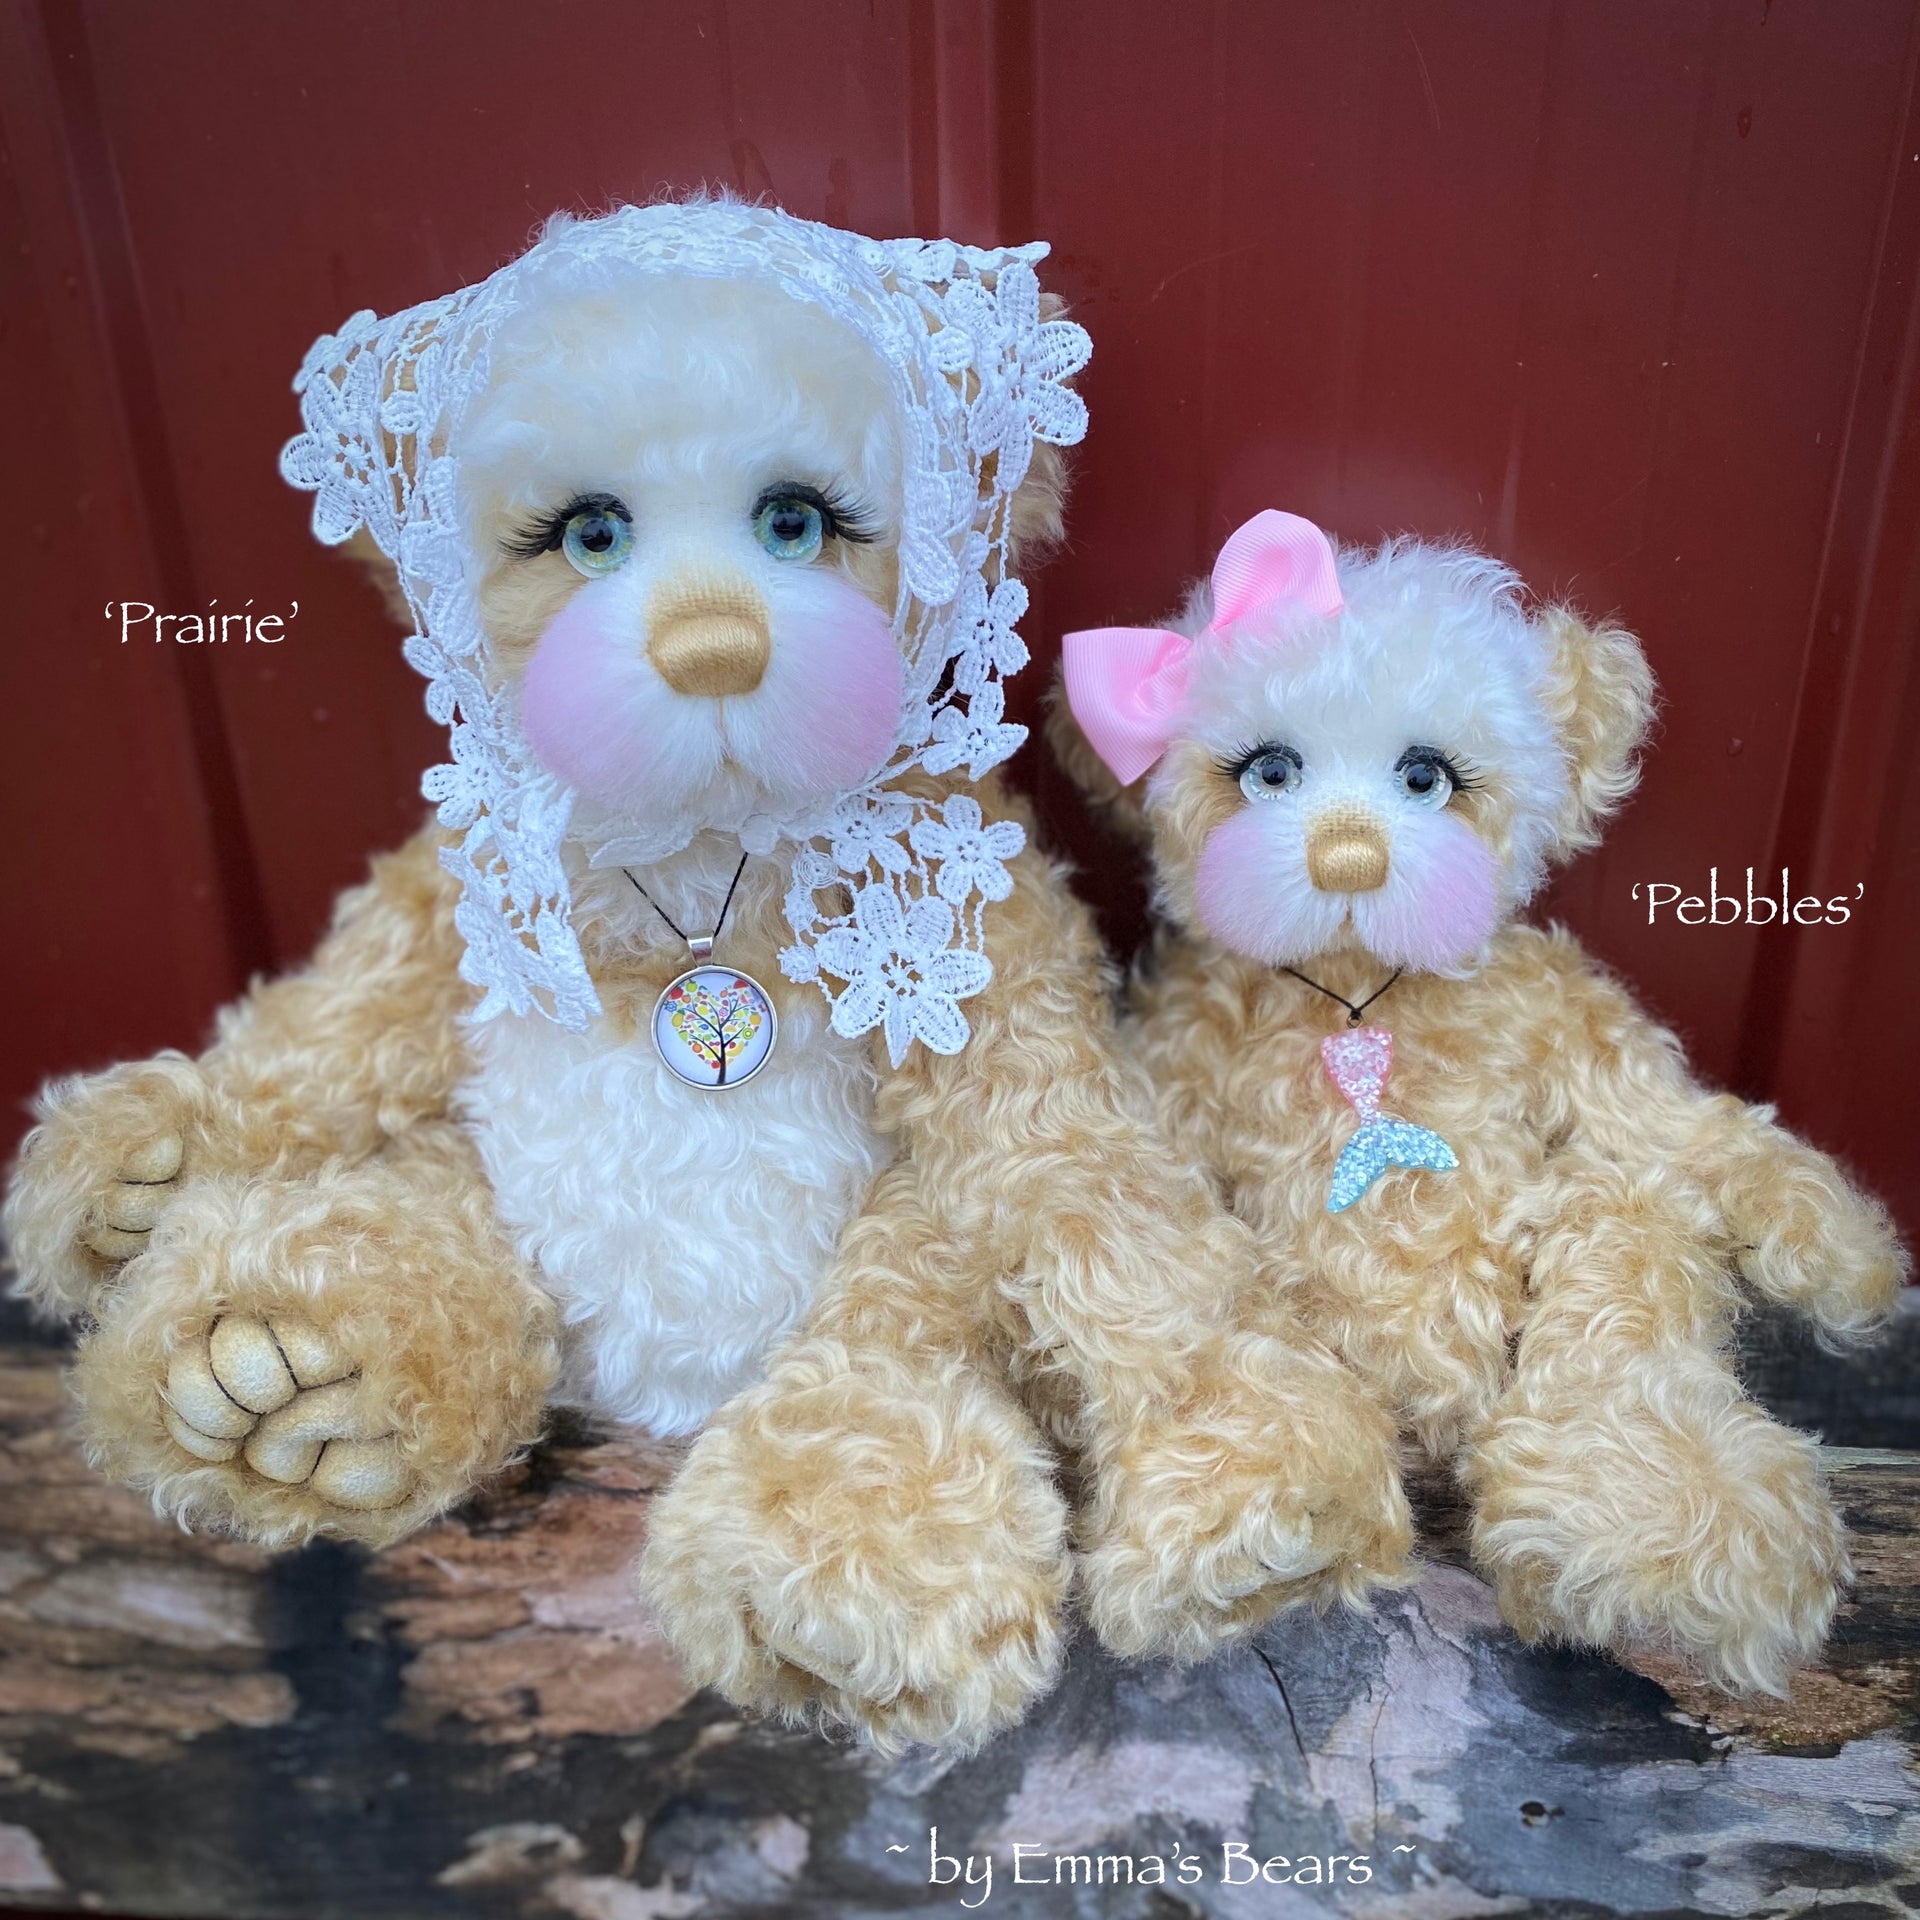 Pebbles - 12" Curly Kid Mohair and Alpaca artist bear by Emma's Bears - OOAK